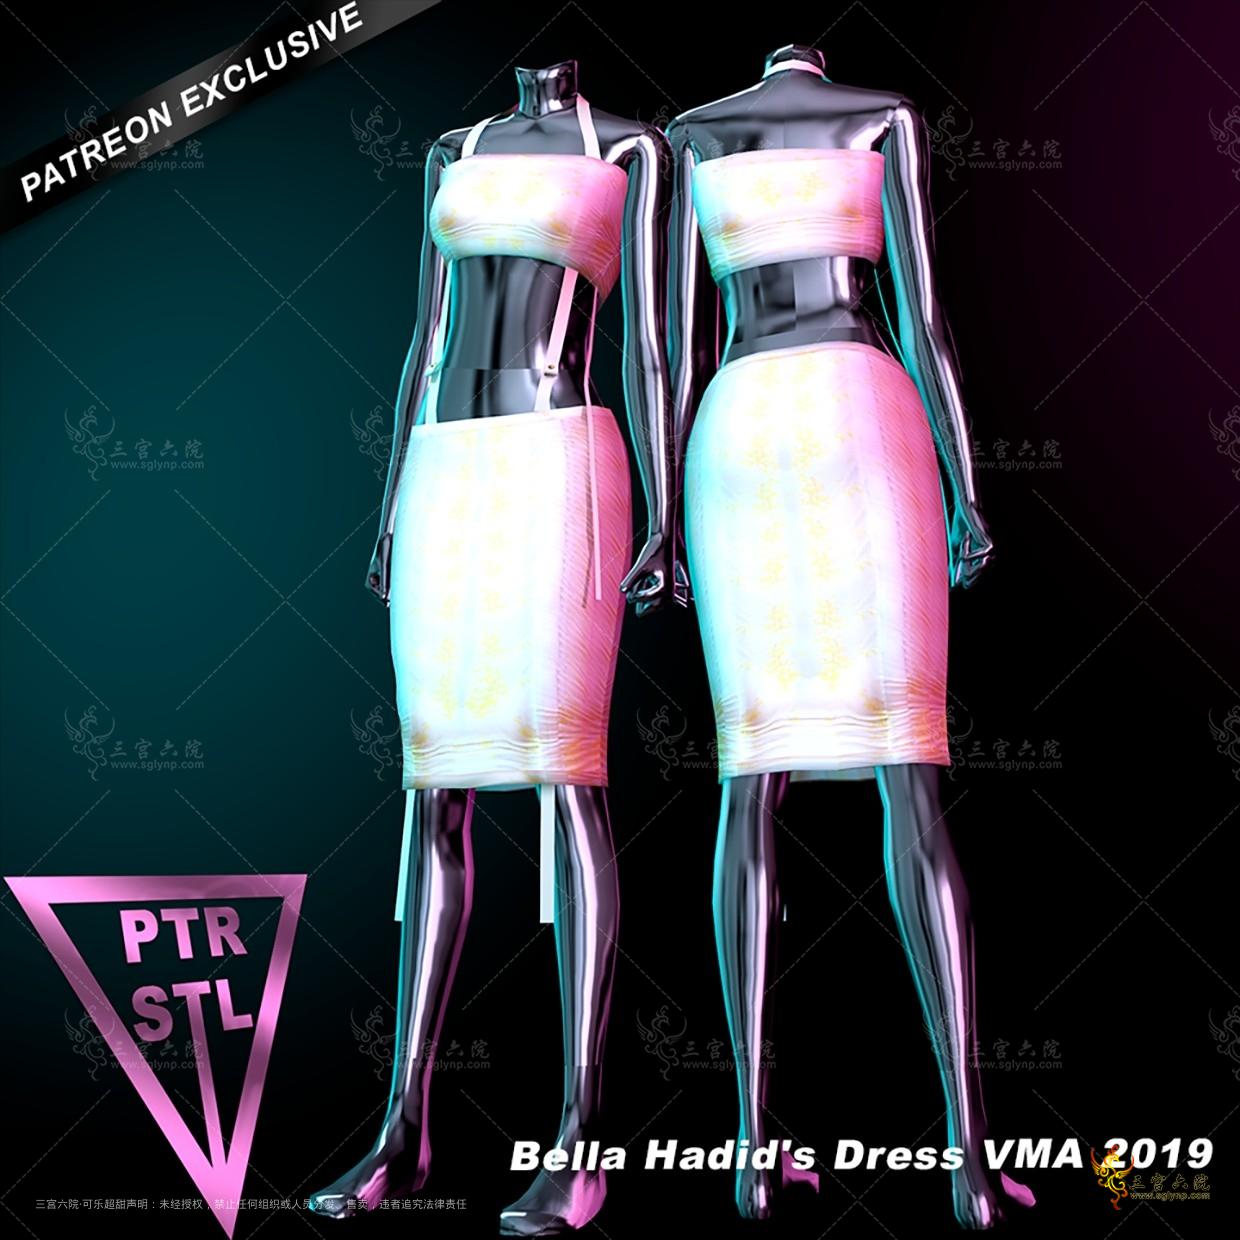 Pietro's Style Bella Hadid's Dress VMA 2019.png